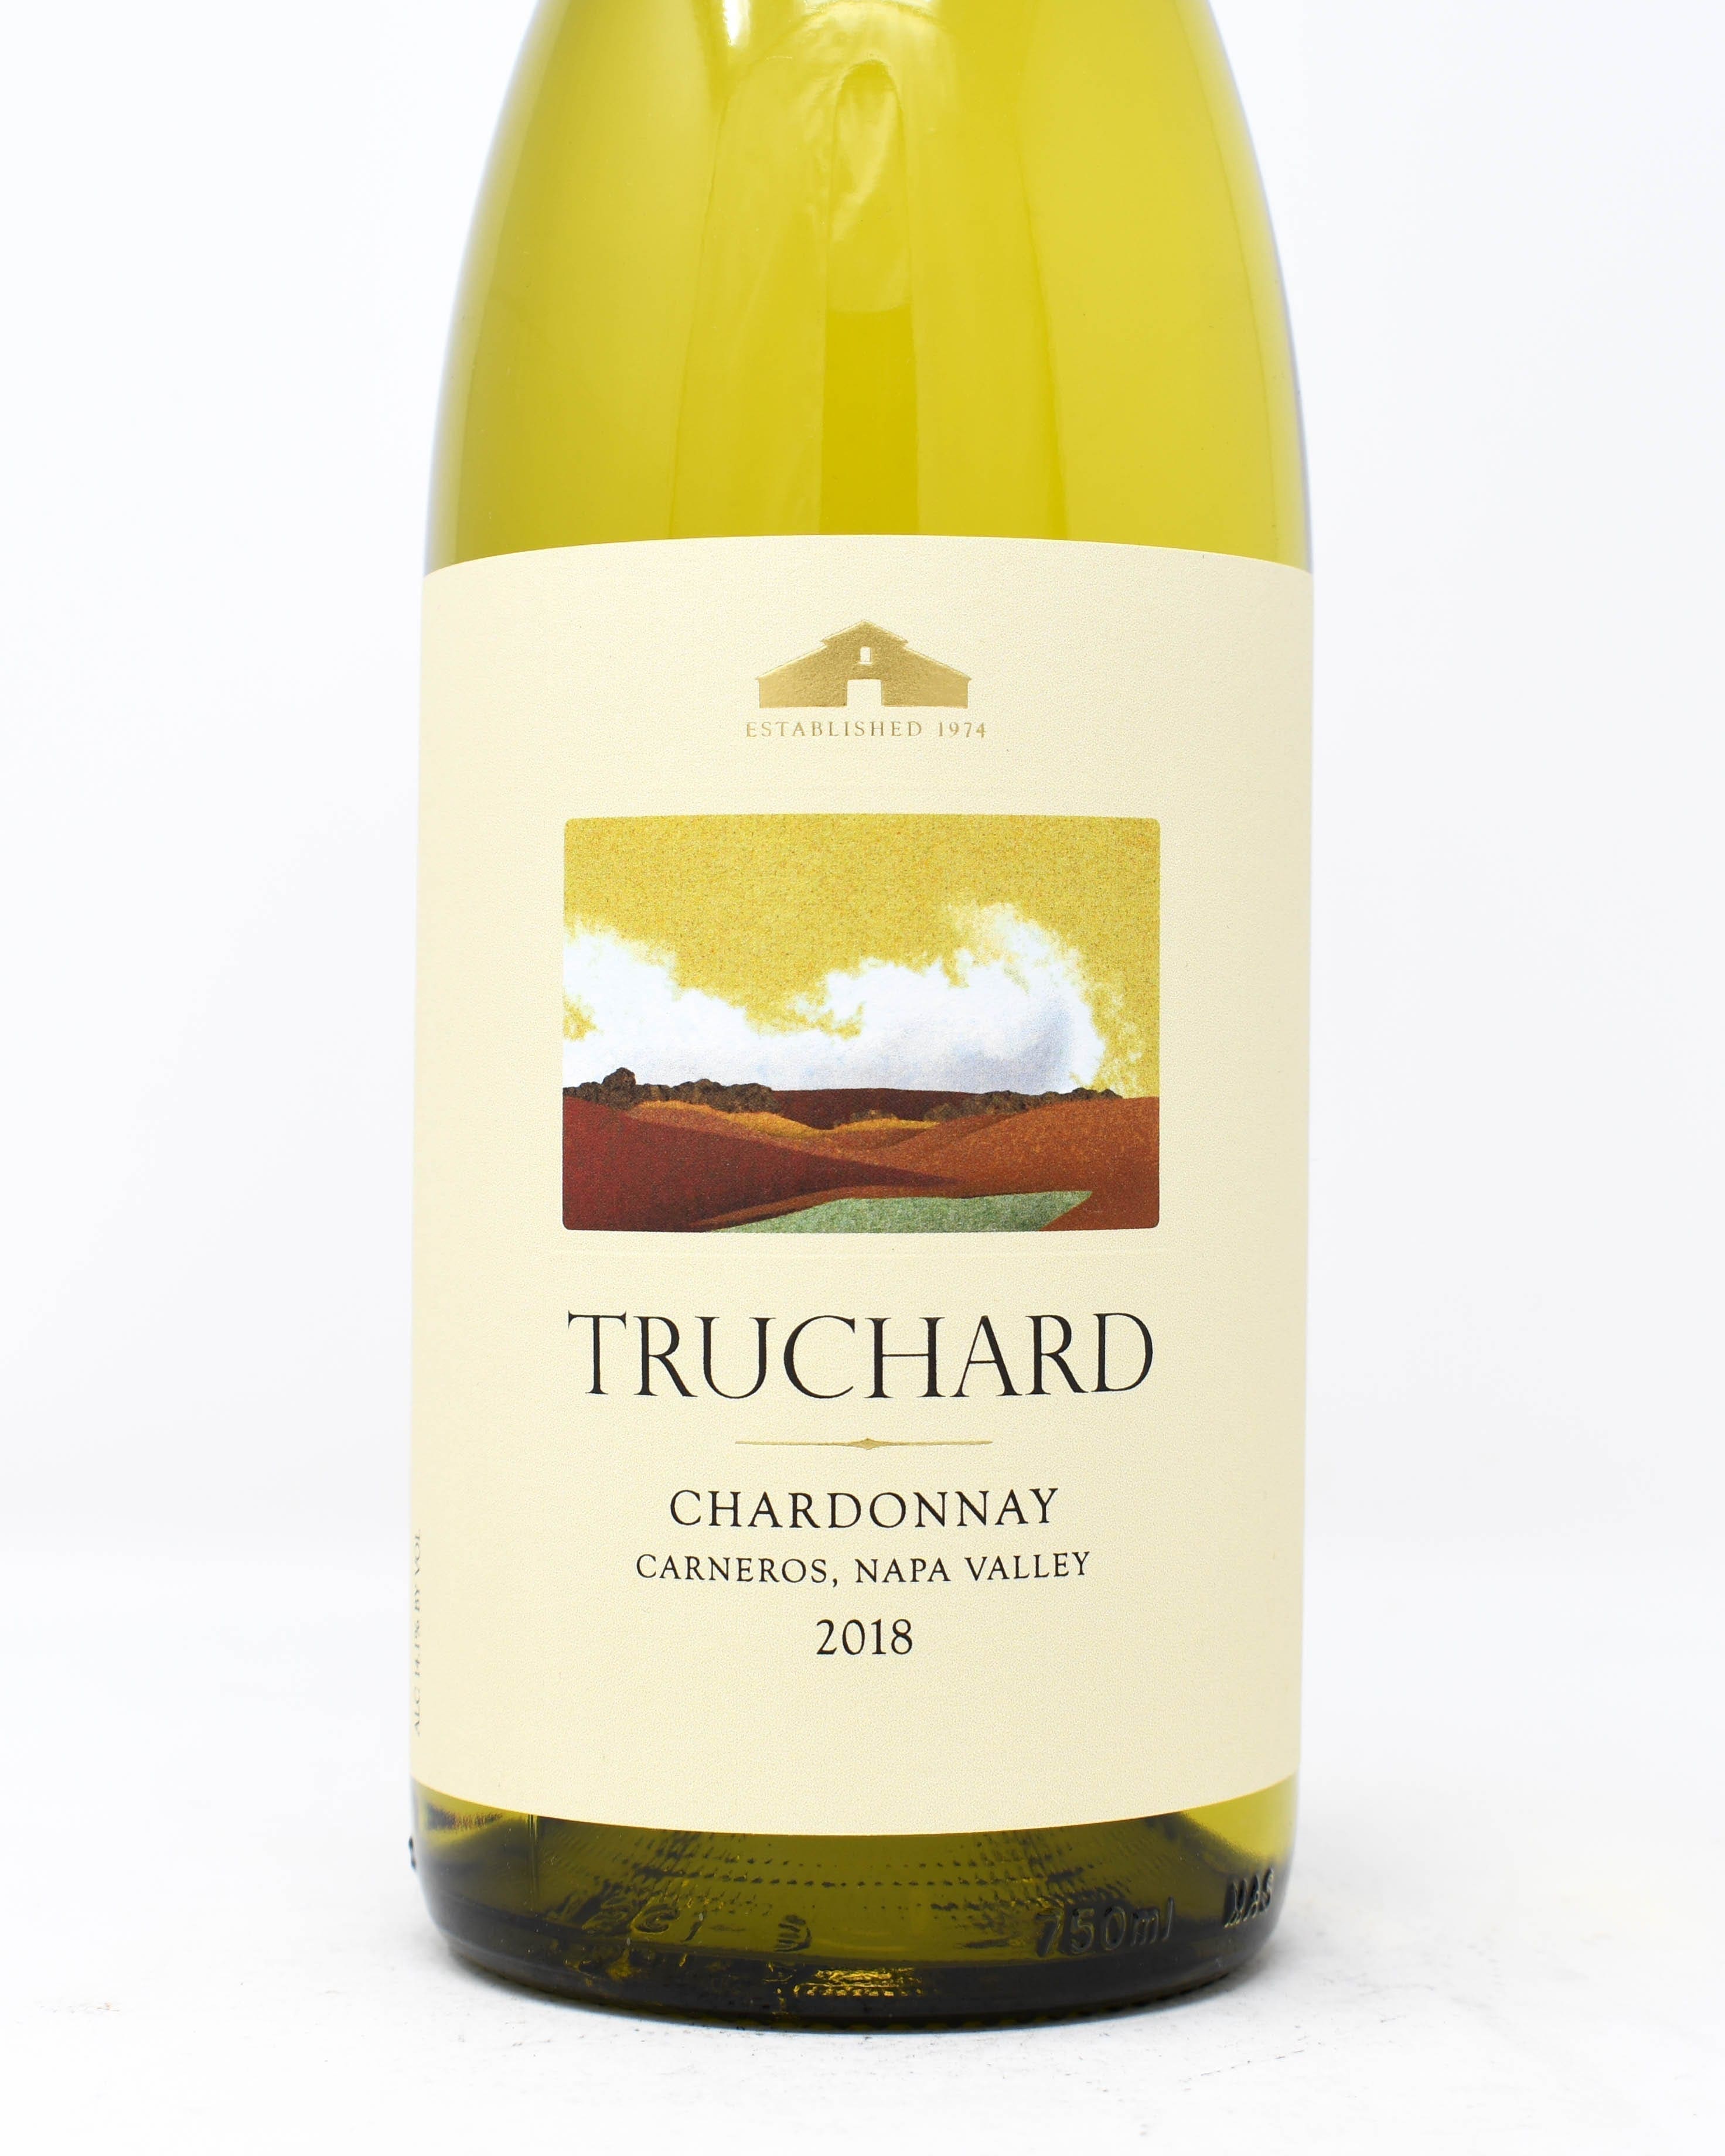 Truchard Chardonnay 2018